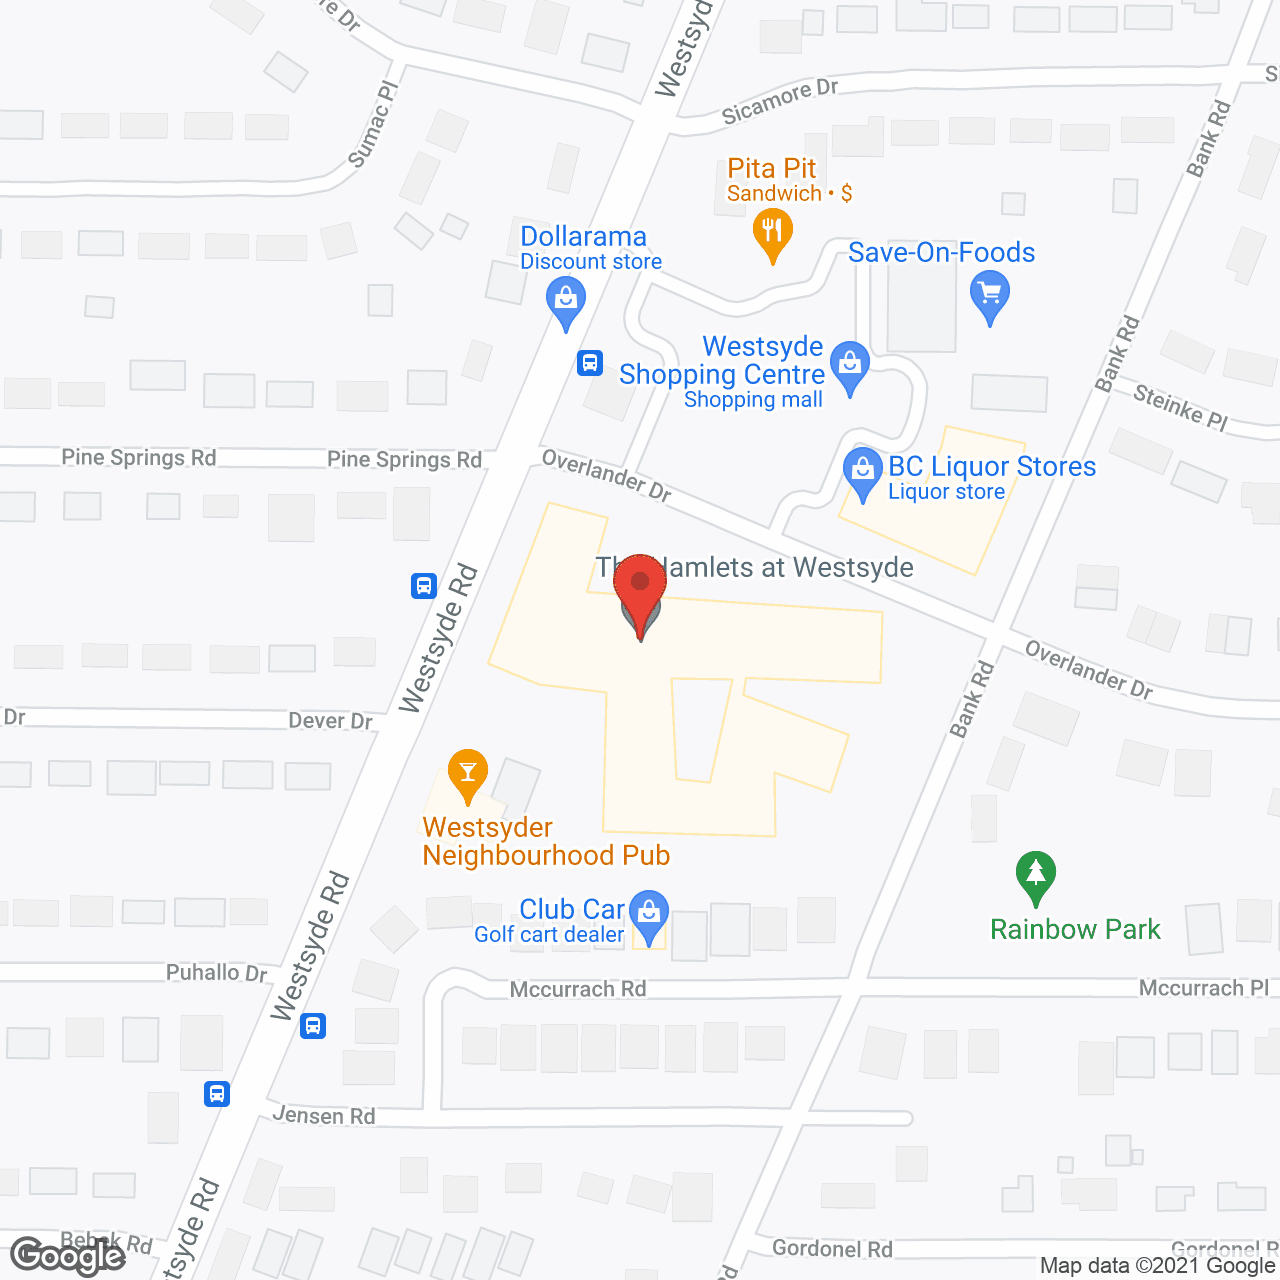 The Hamlets at Westsyde in google map